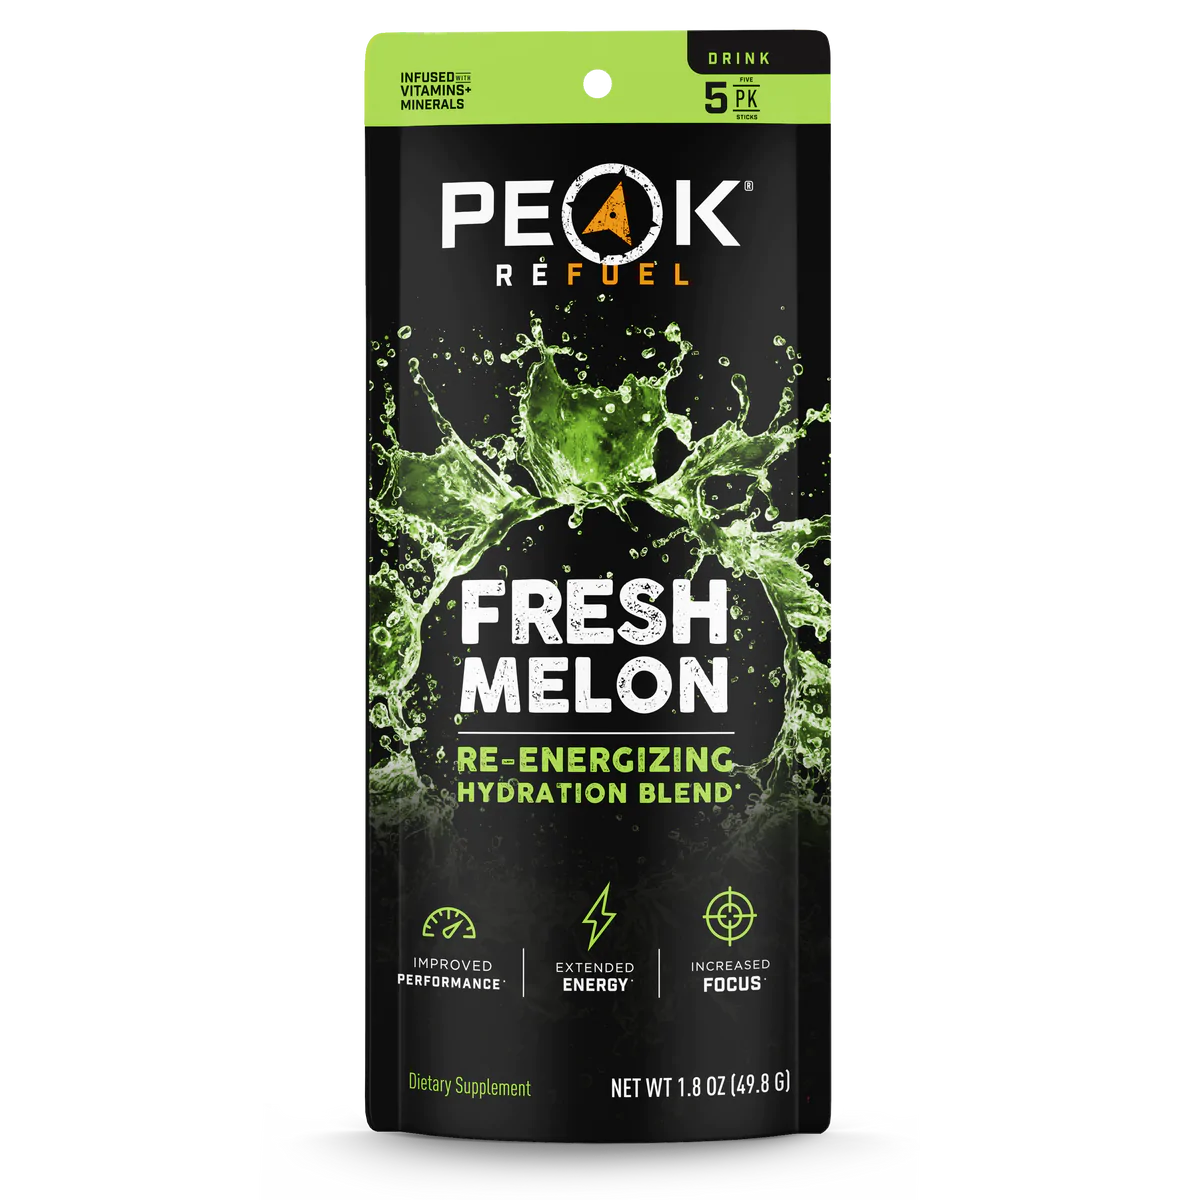 peak refuel fresh melon energy drink mix for sale near austin texas at hawkes outdoors 2102512882